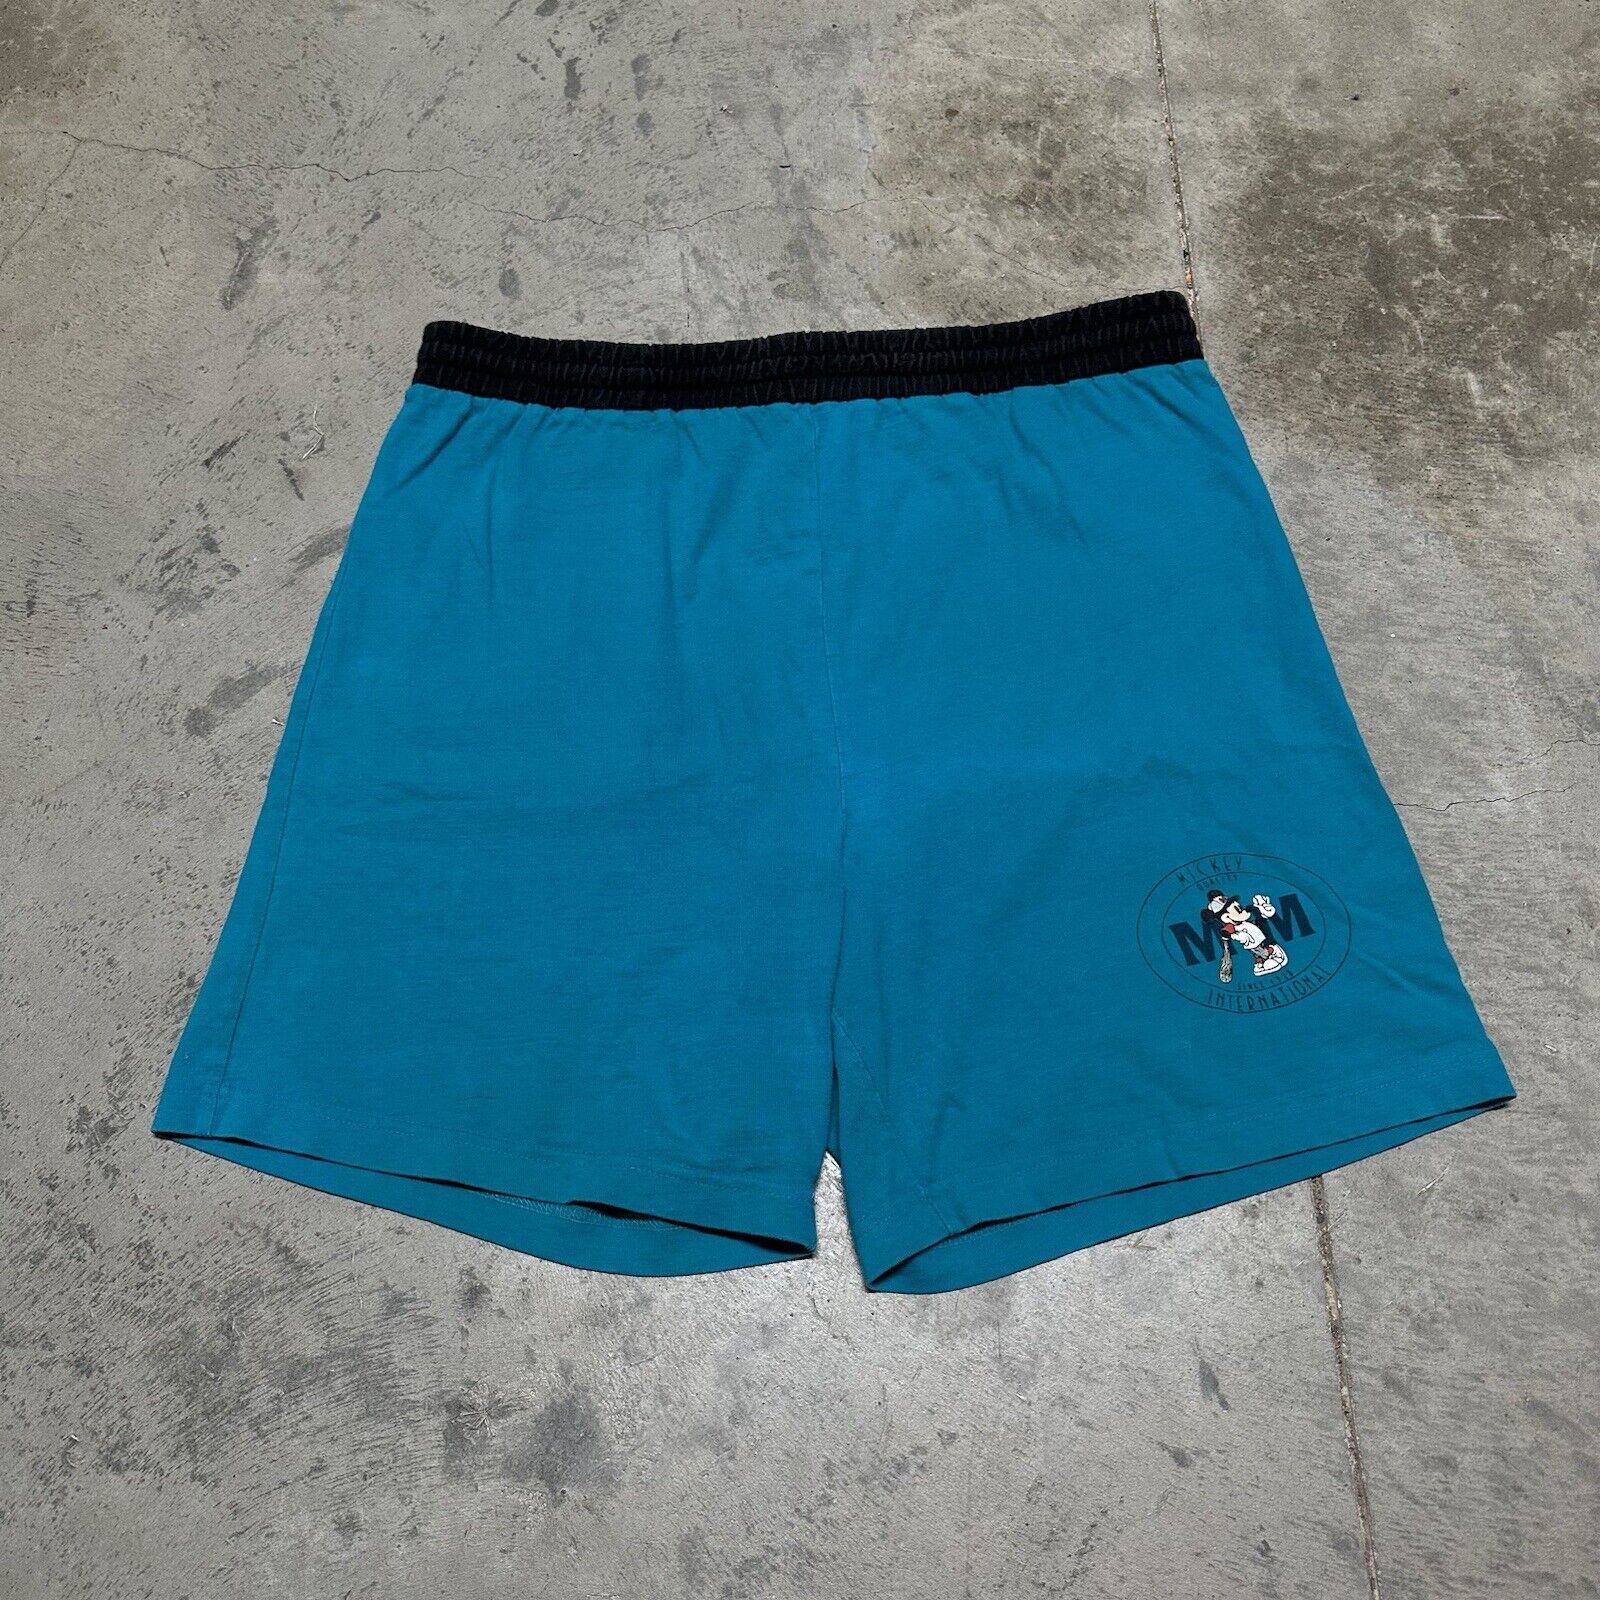 Vintage Disney Originals Mickey Mouse Shorts Size Medium Blue Sweat Shorts